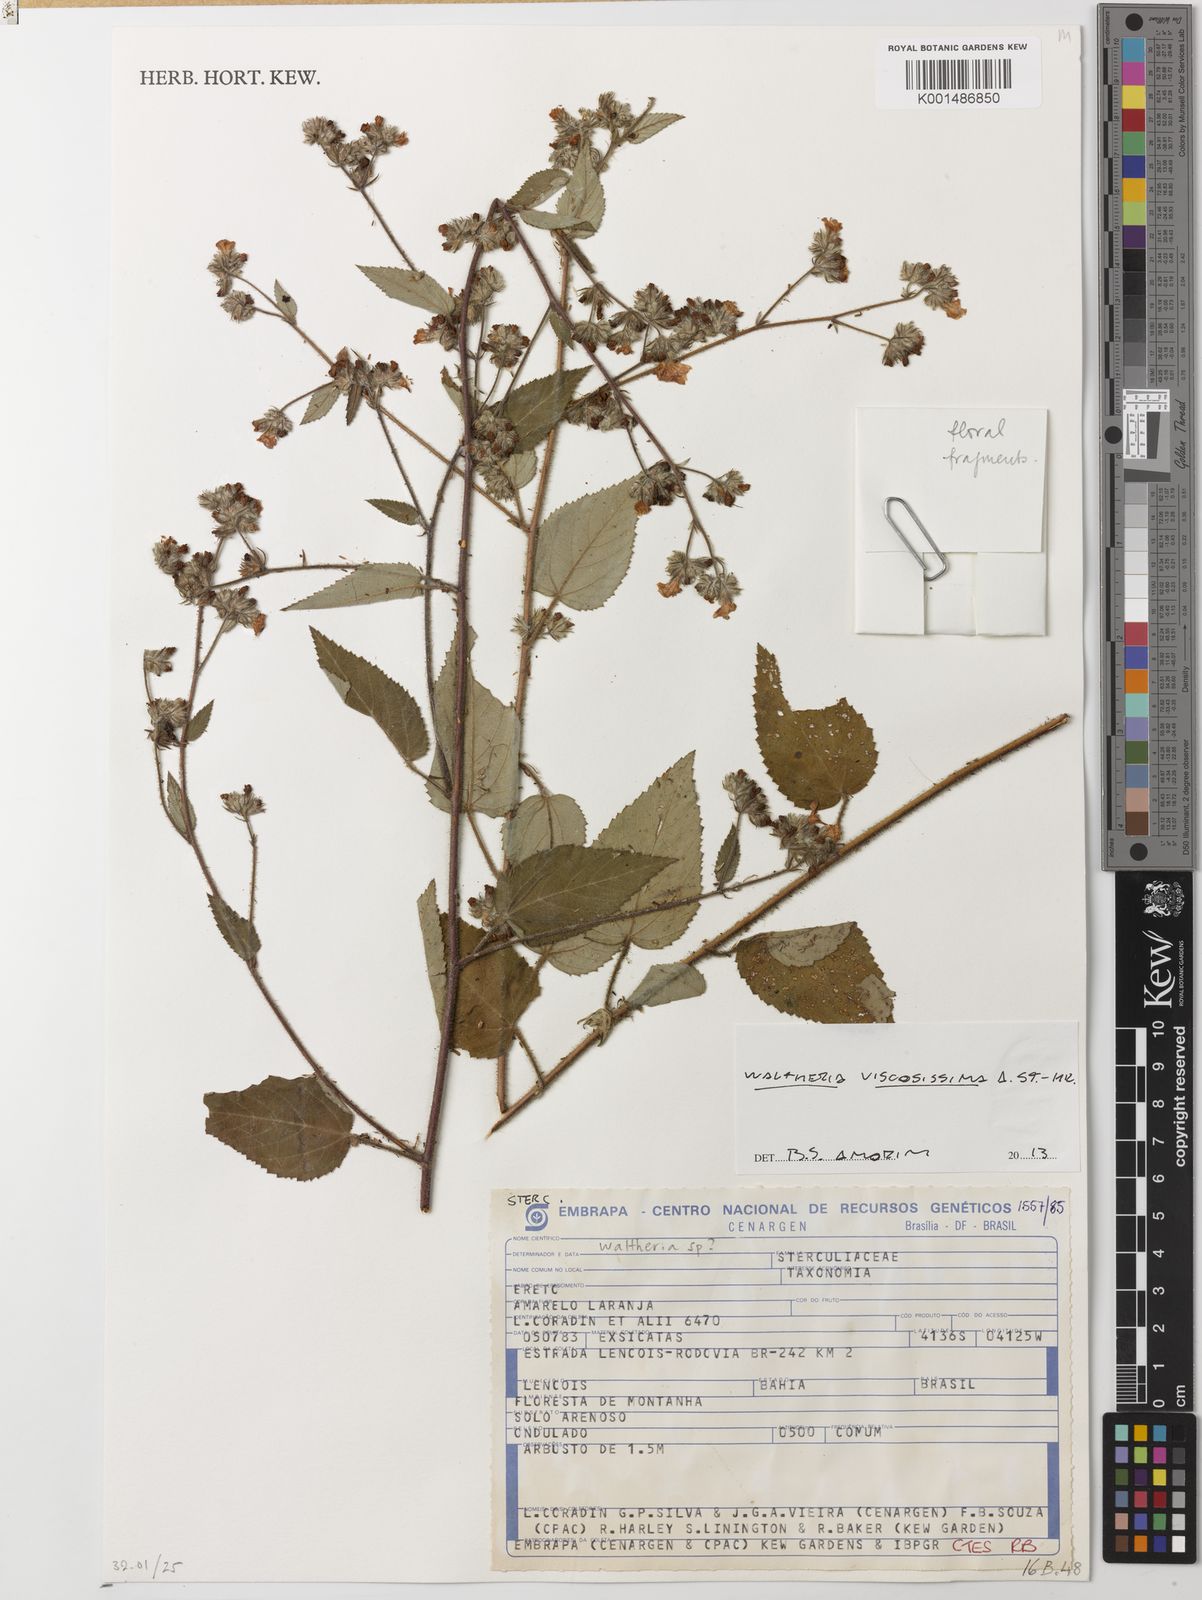 Main collectors of Mexico's vascular plants: a catalogue built from online  databases - Revista Mexicana de Biodiversidad